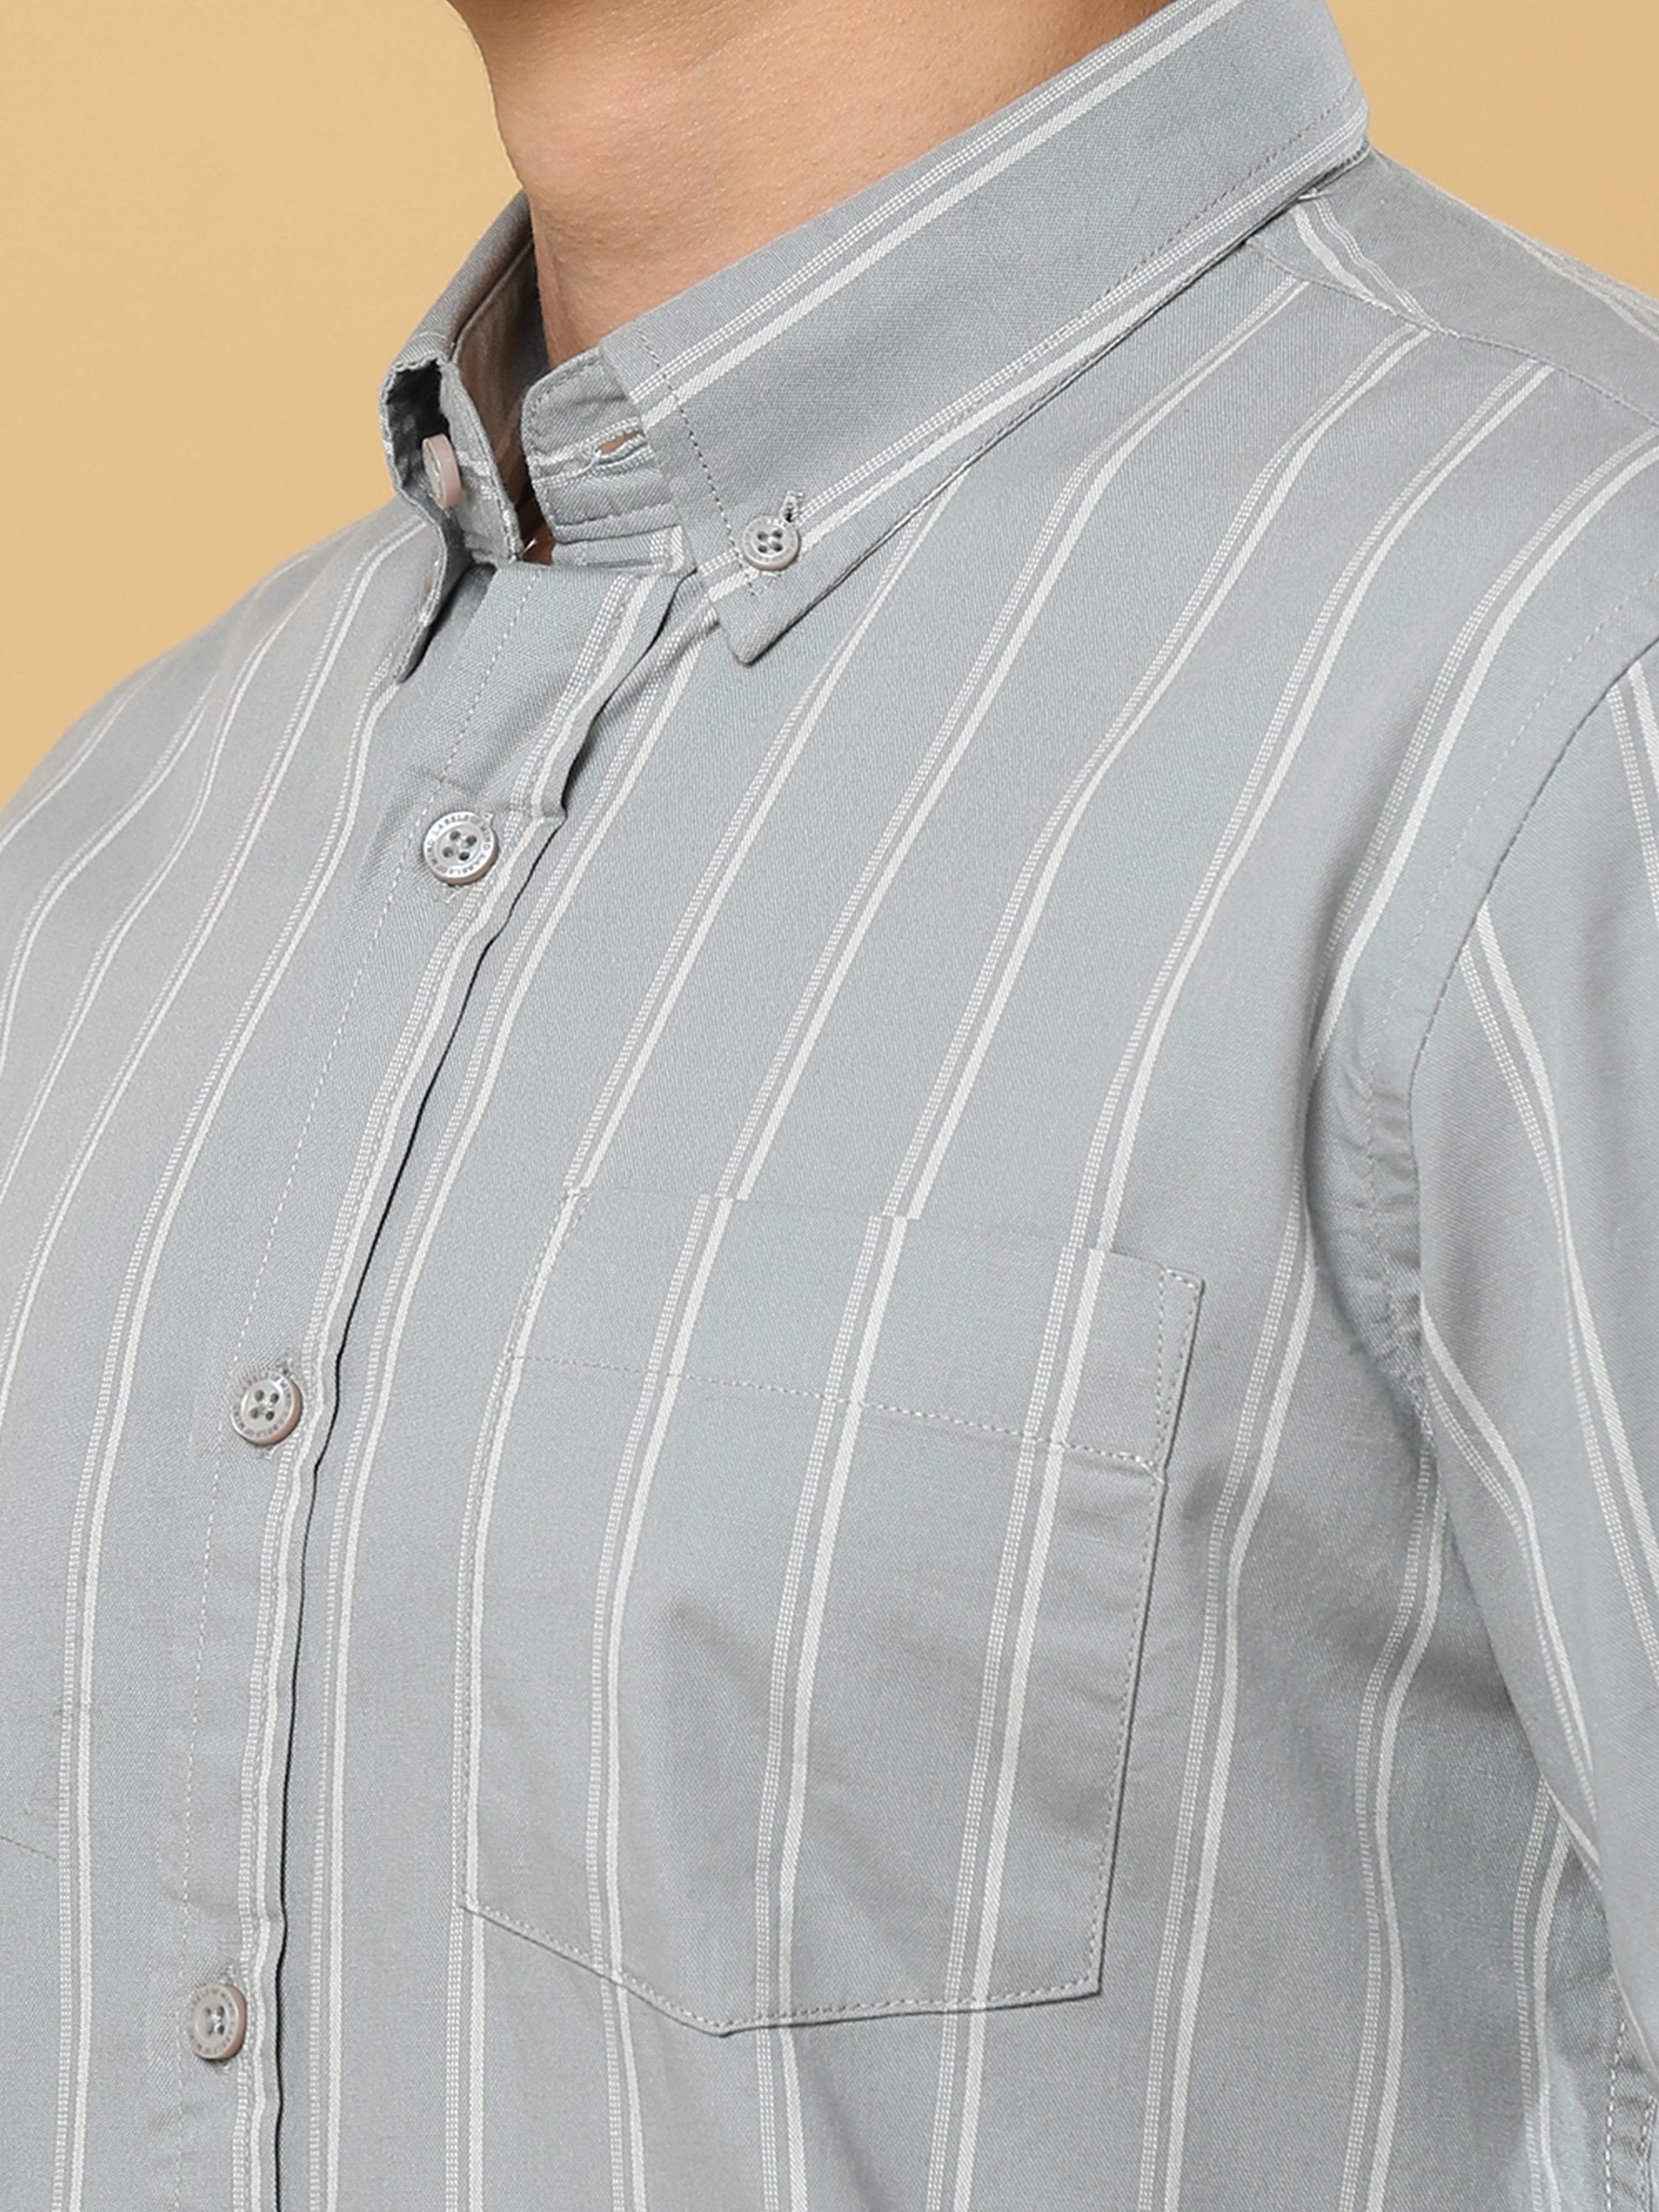 Buy Stylish Grey Striped Shirt At Amazing PriceRs. 1019.00